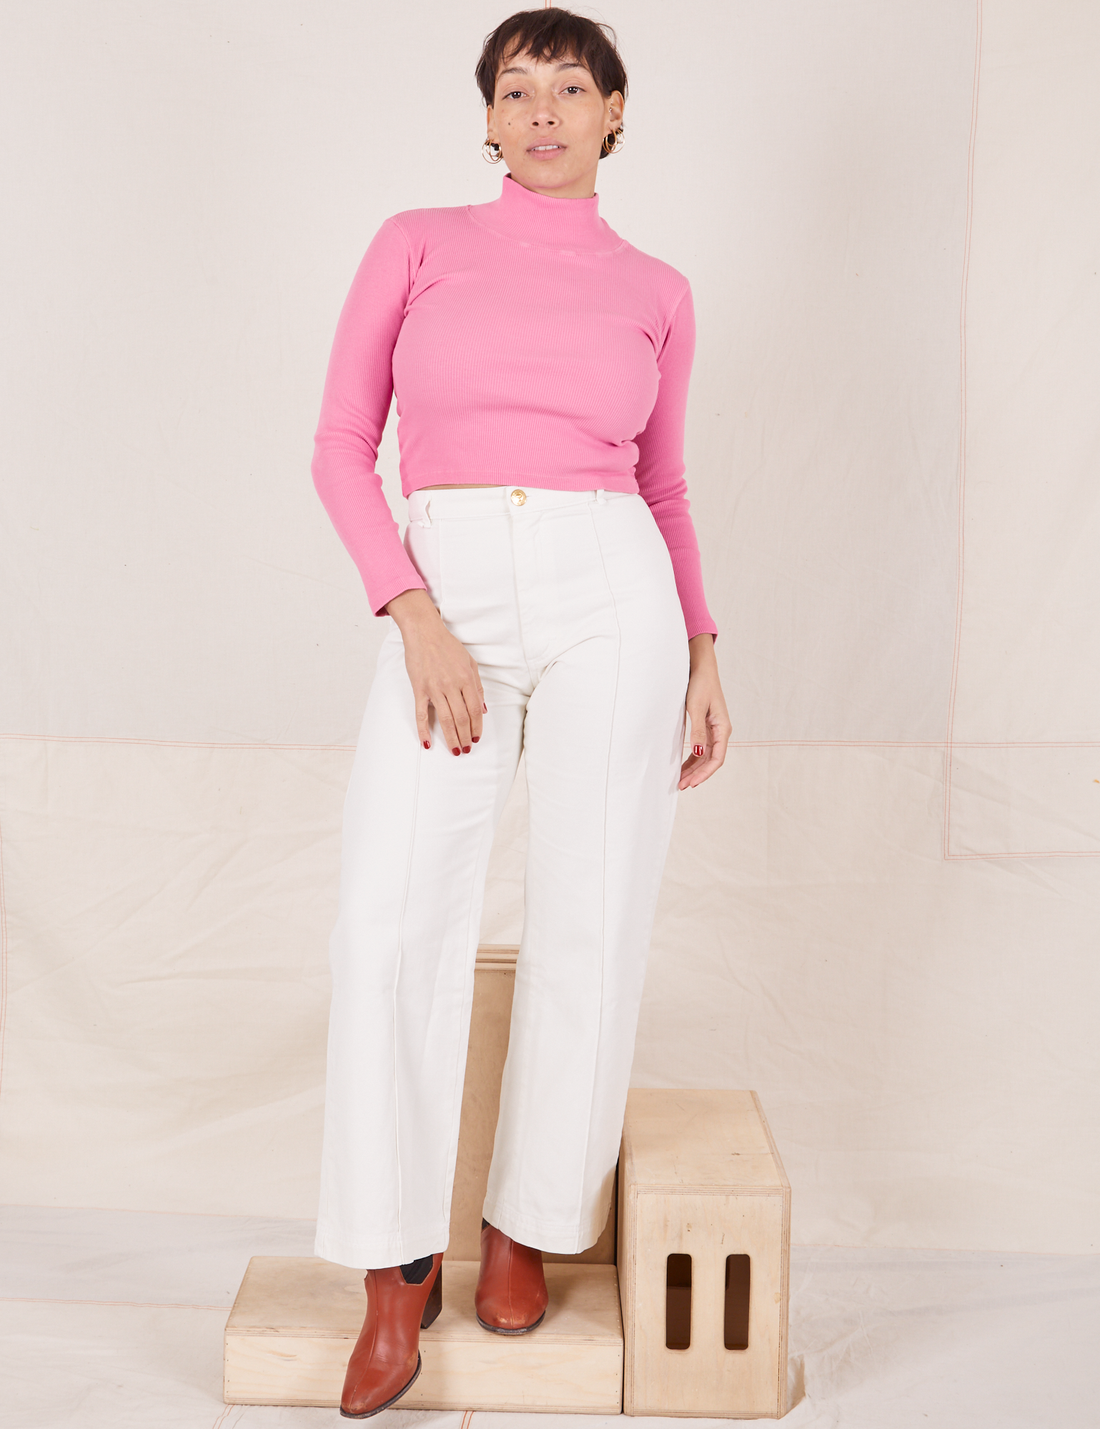 Tiara is wearing Essential Turtleneck in Bubblegum Pink and vintage off-white  Western Pants